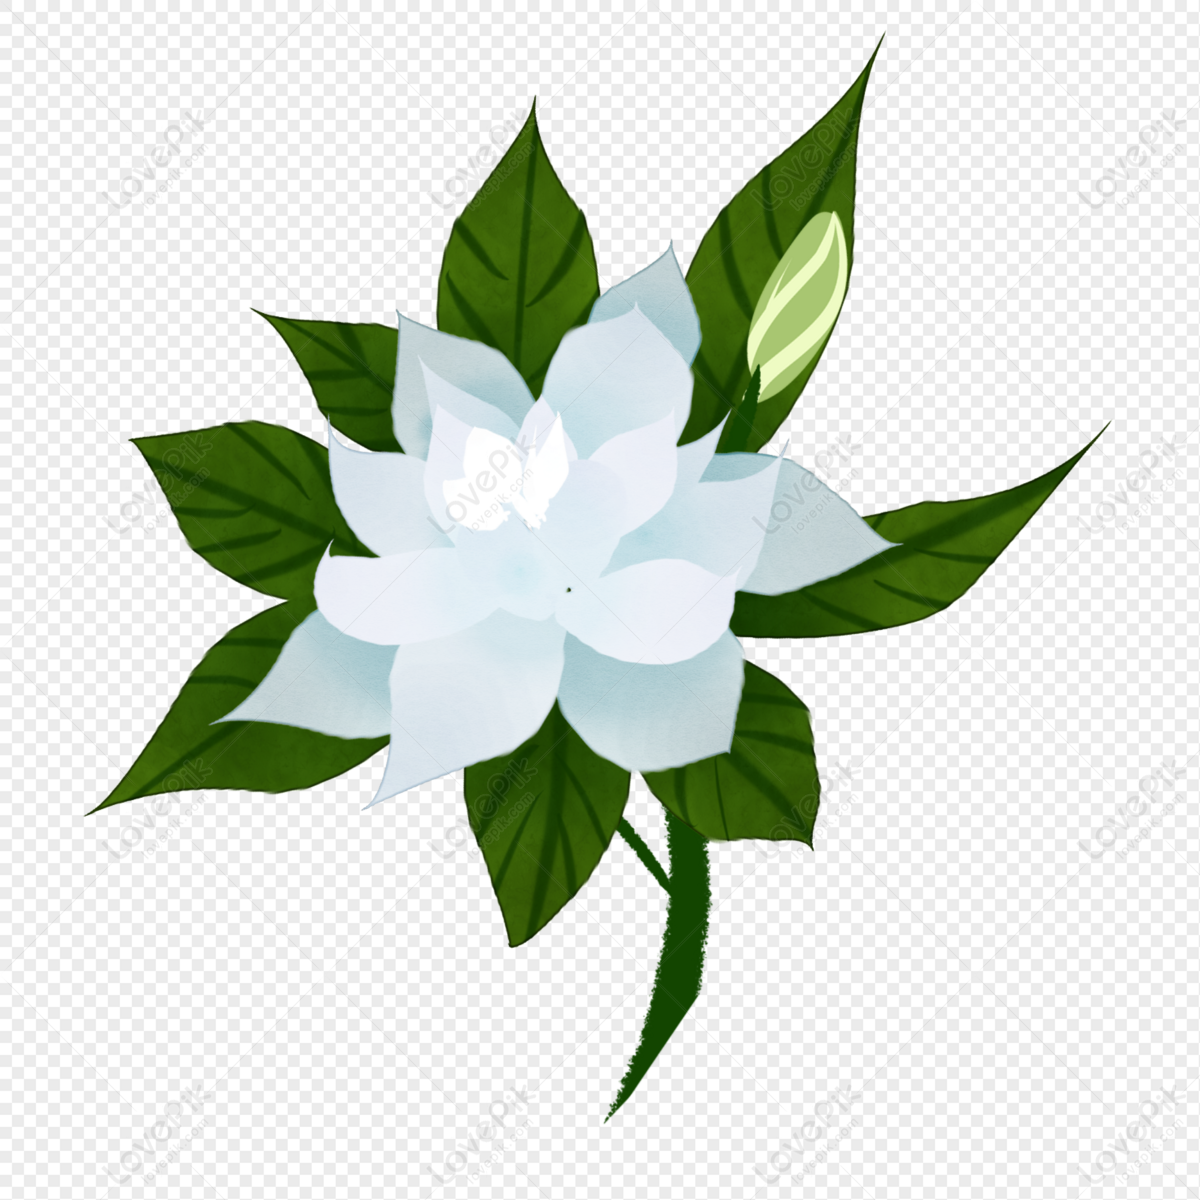 Hand Drawn Jasmine Flower Illustration With Line Art Stock Illustration -  Download Image Now - iStock